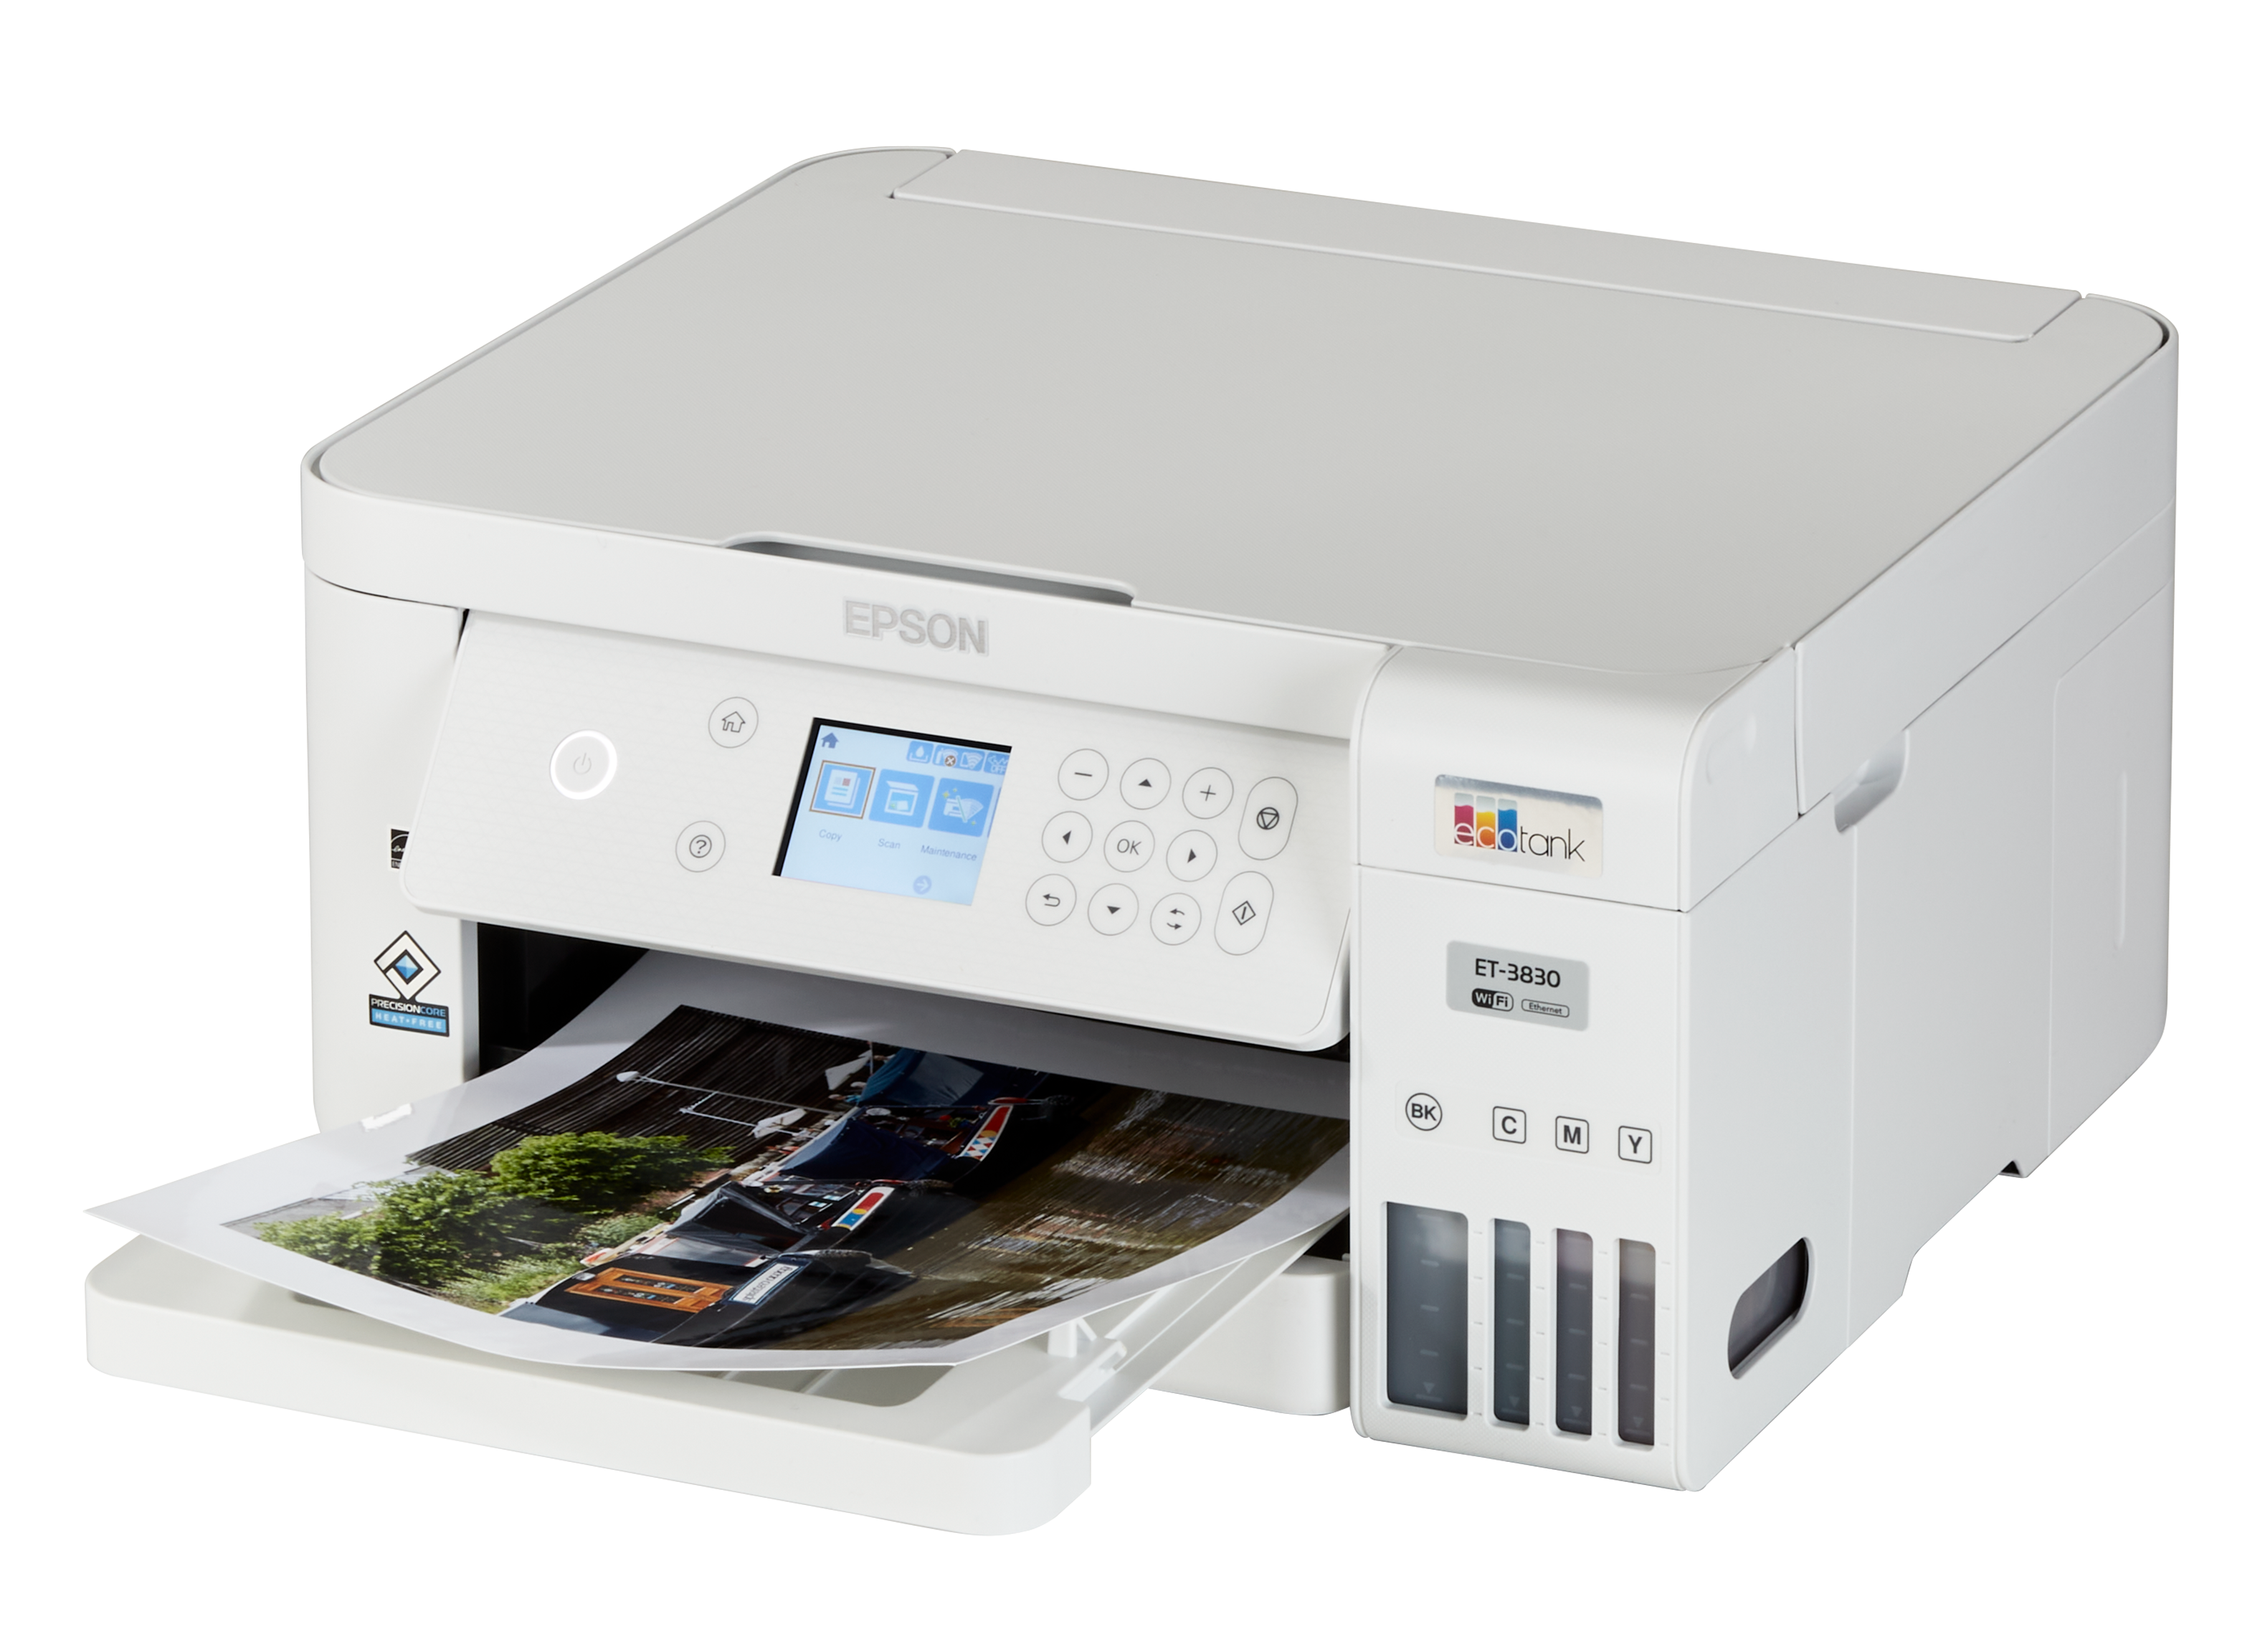 Epson EcoTank ET-3830 Printer Review - Consumer Reports